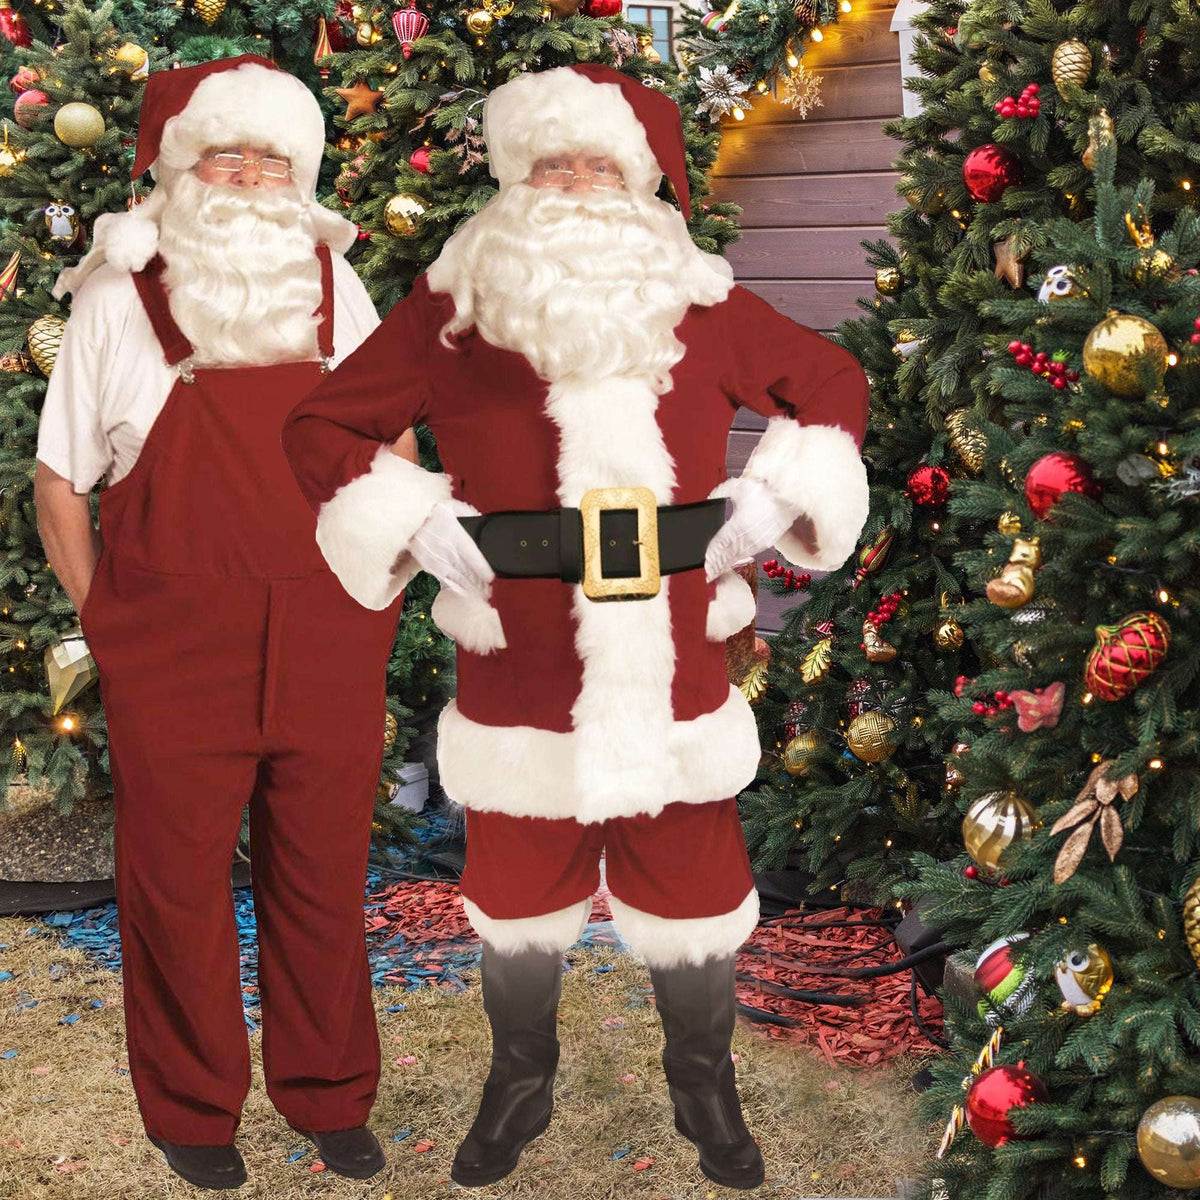 Crimson Velvet Deluxe Santa Suit with Matching Overalls Adult Costume